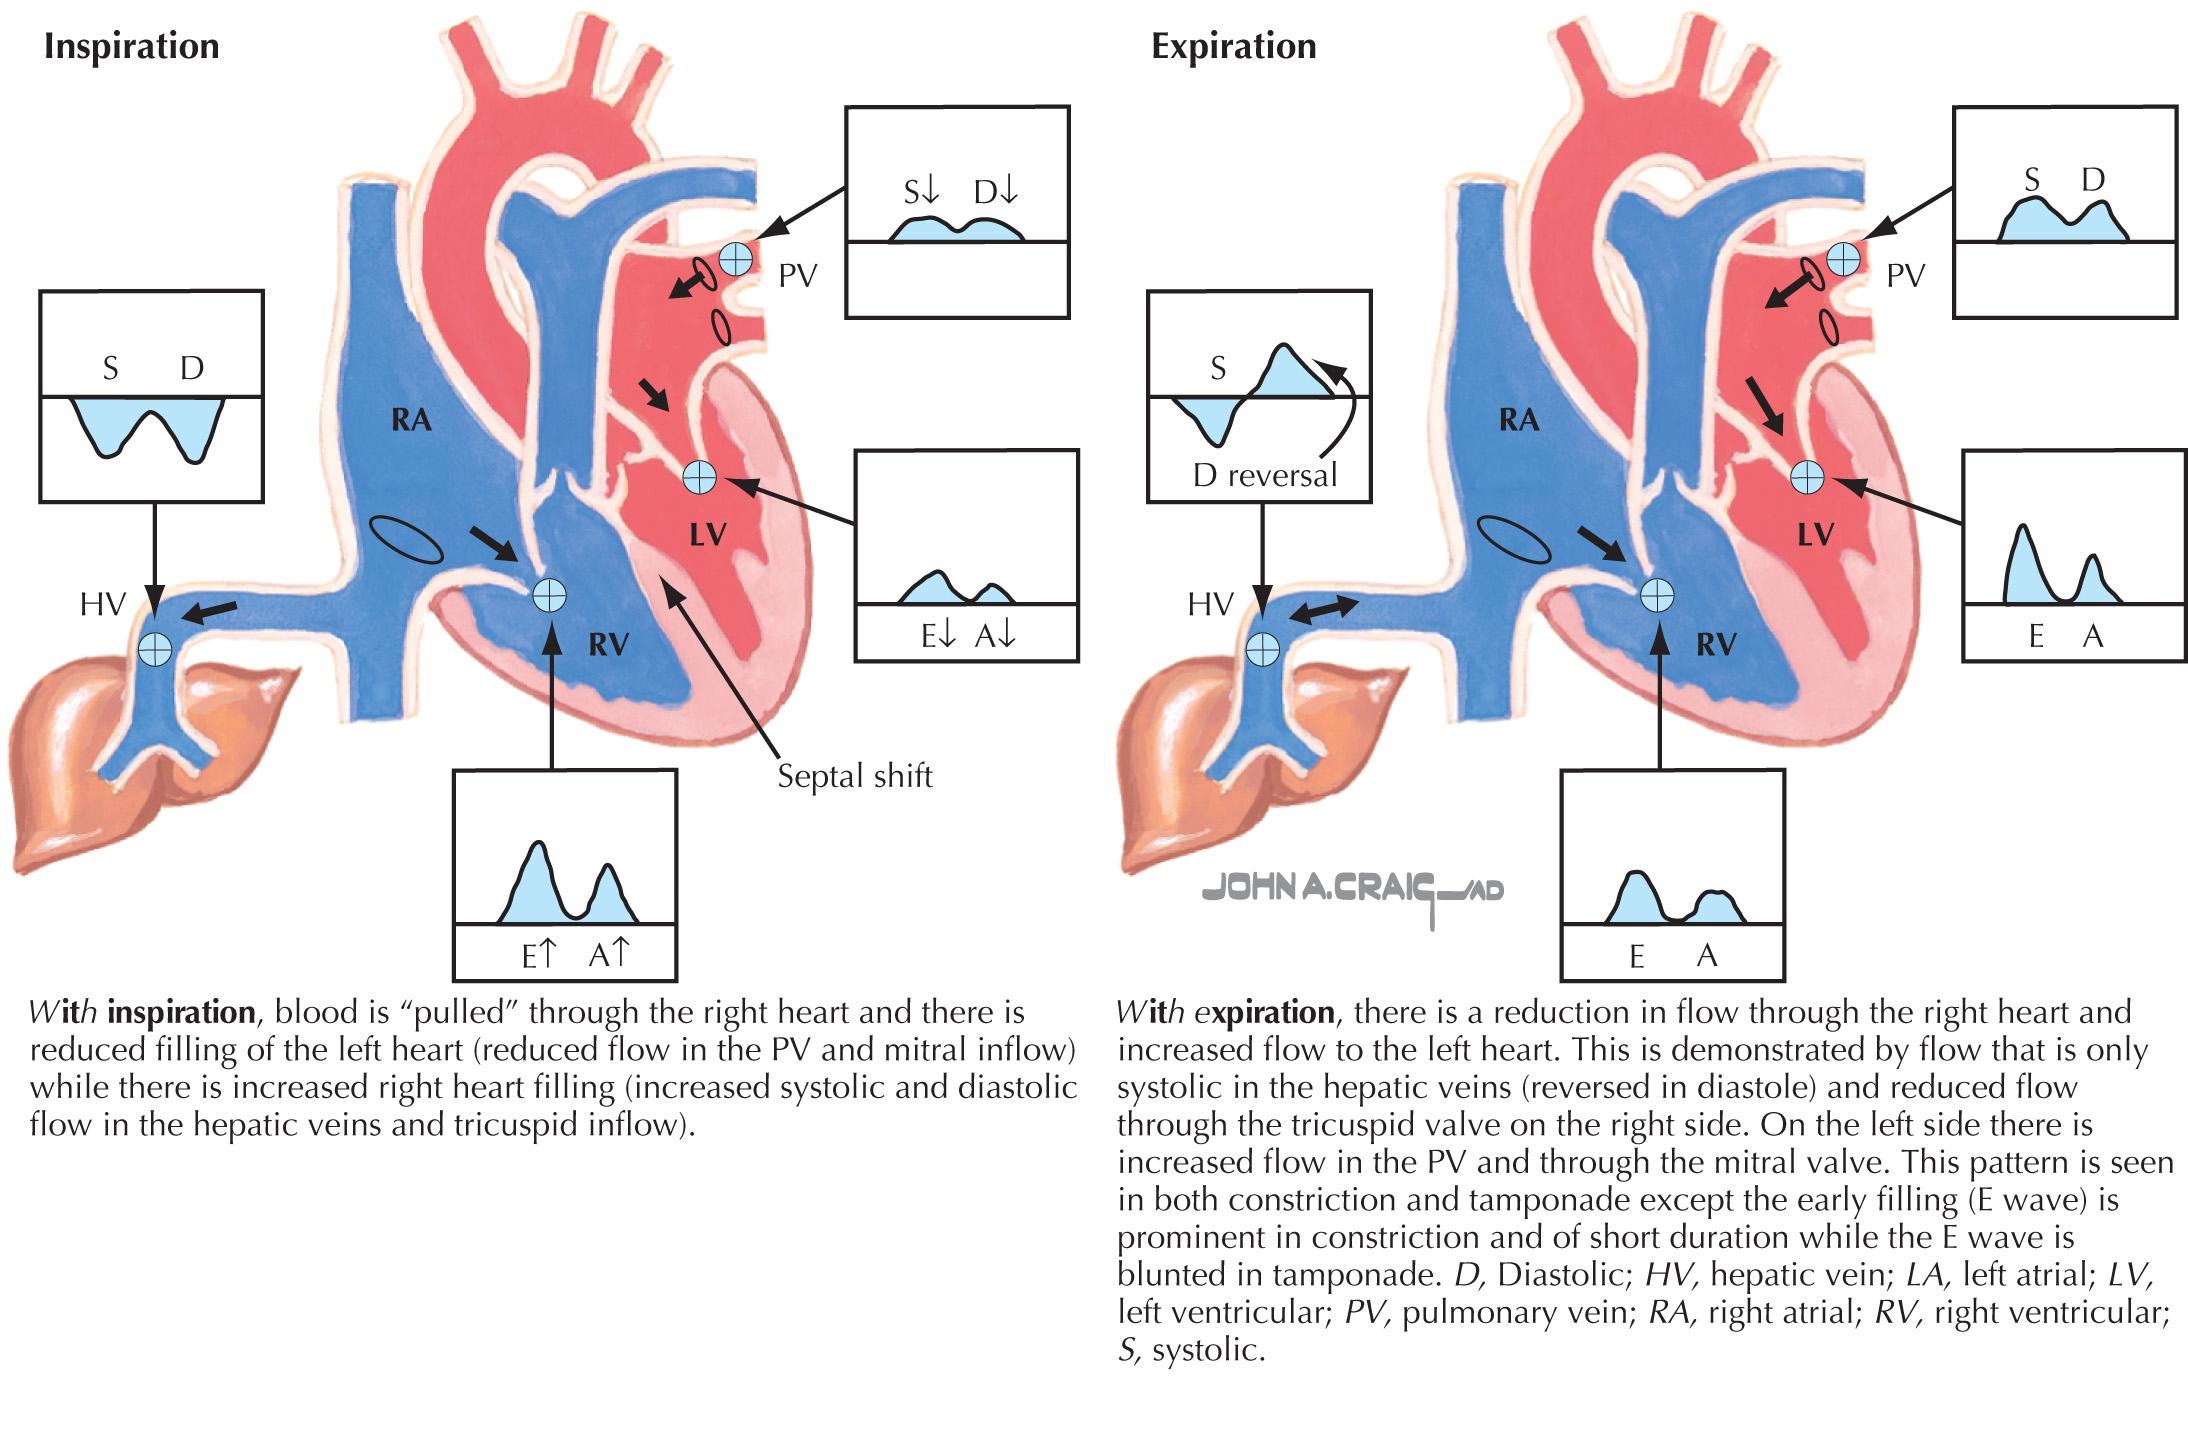 FIG 57.5, Respiratory Echo-Doppler Flow Patterns in Pericardial Disease.